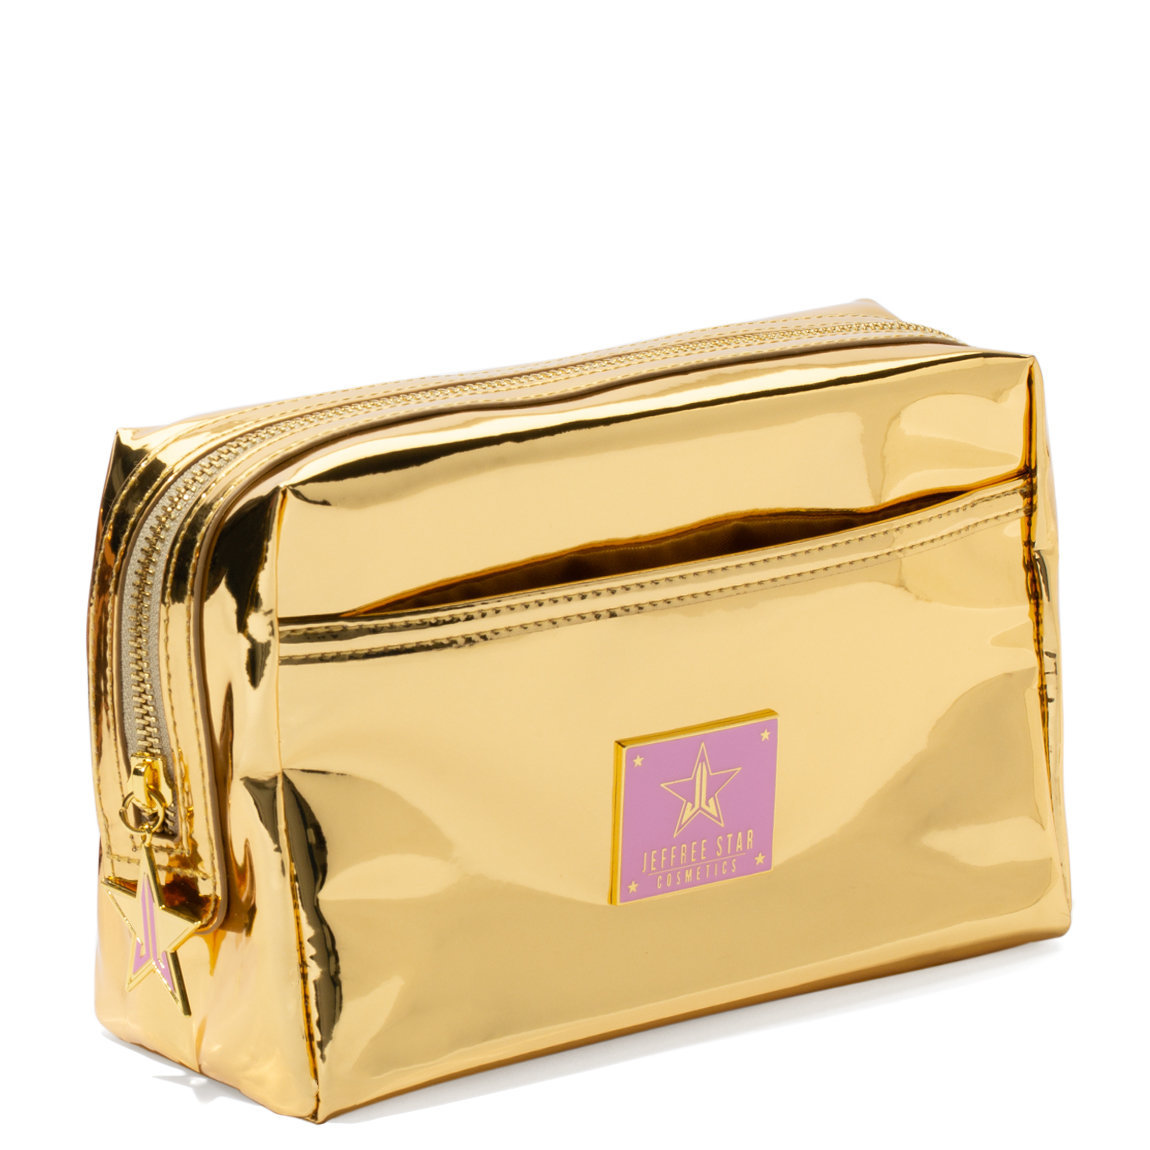 Jeffree Star Cosmetics Makeup Bag Reflective Gold | Beautylish